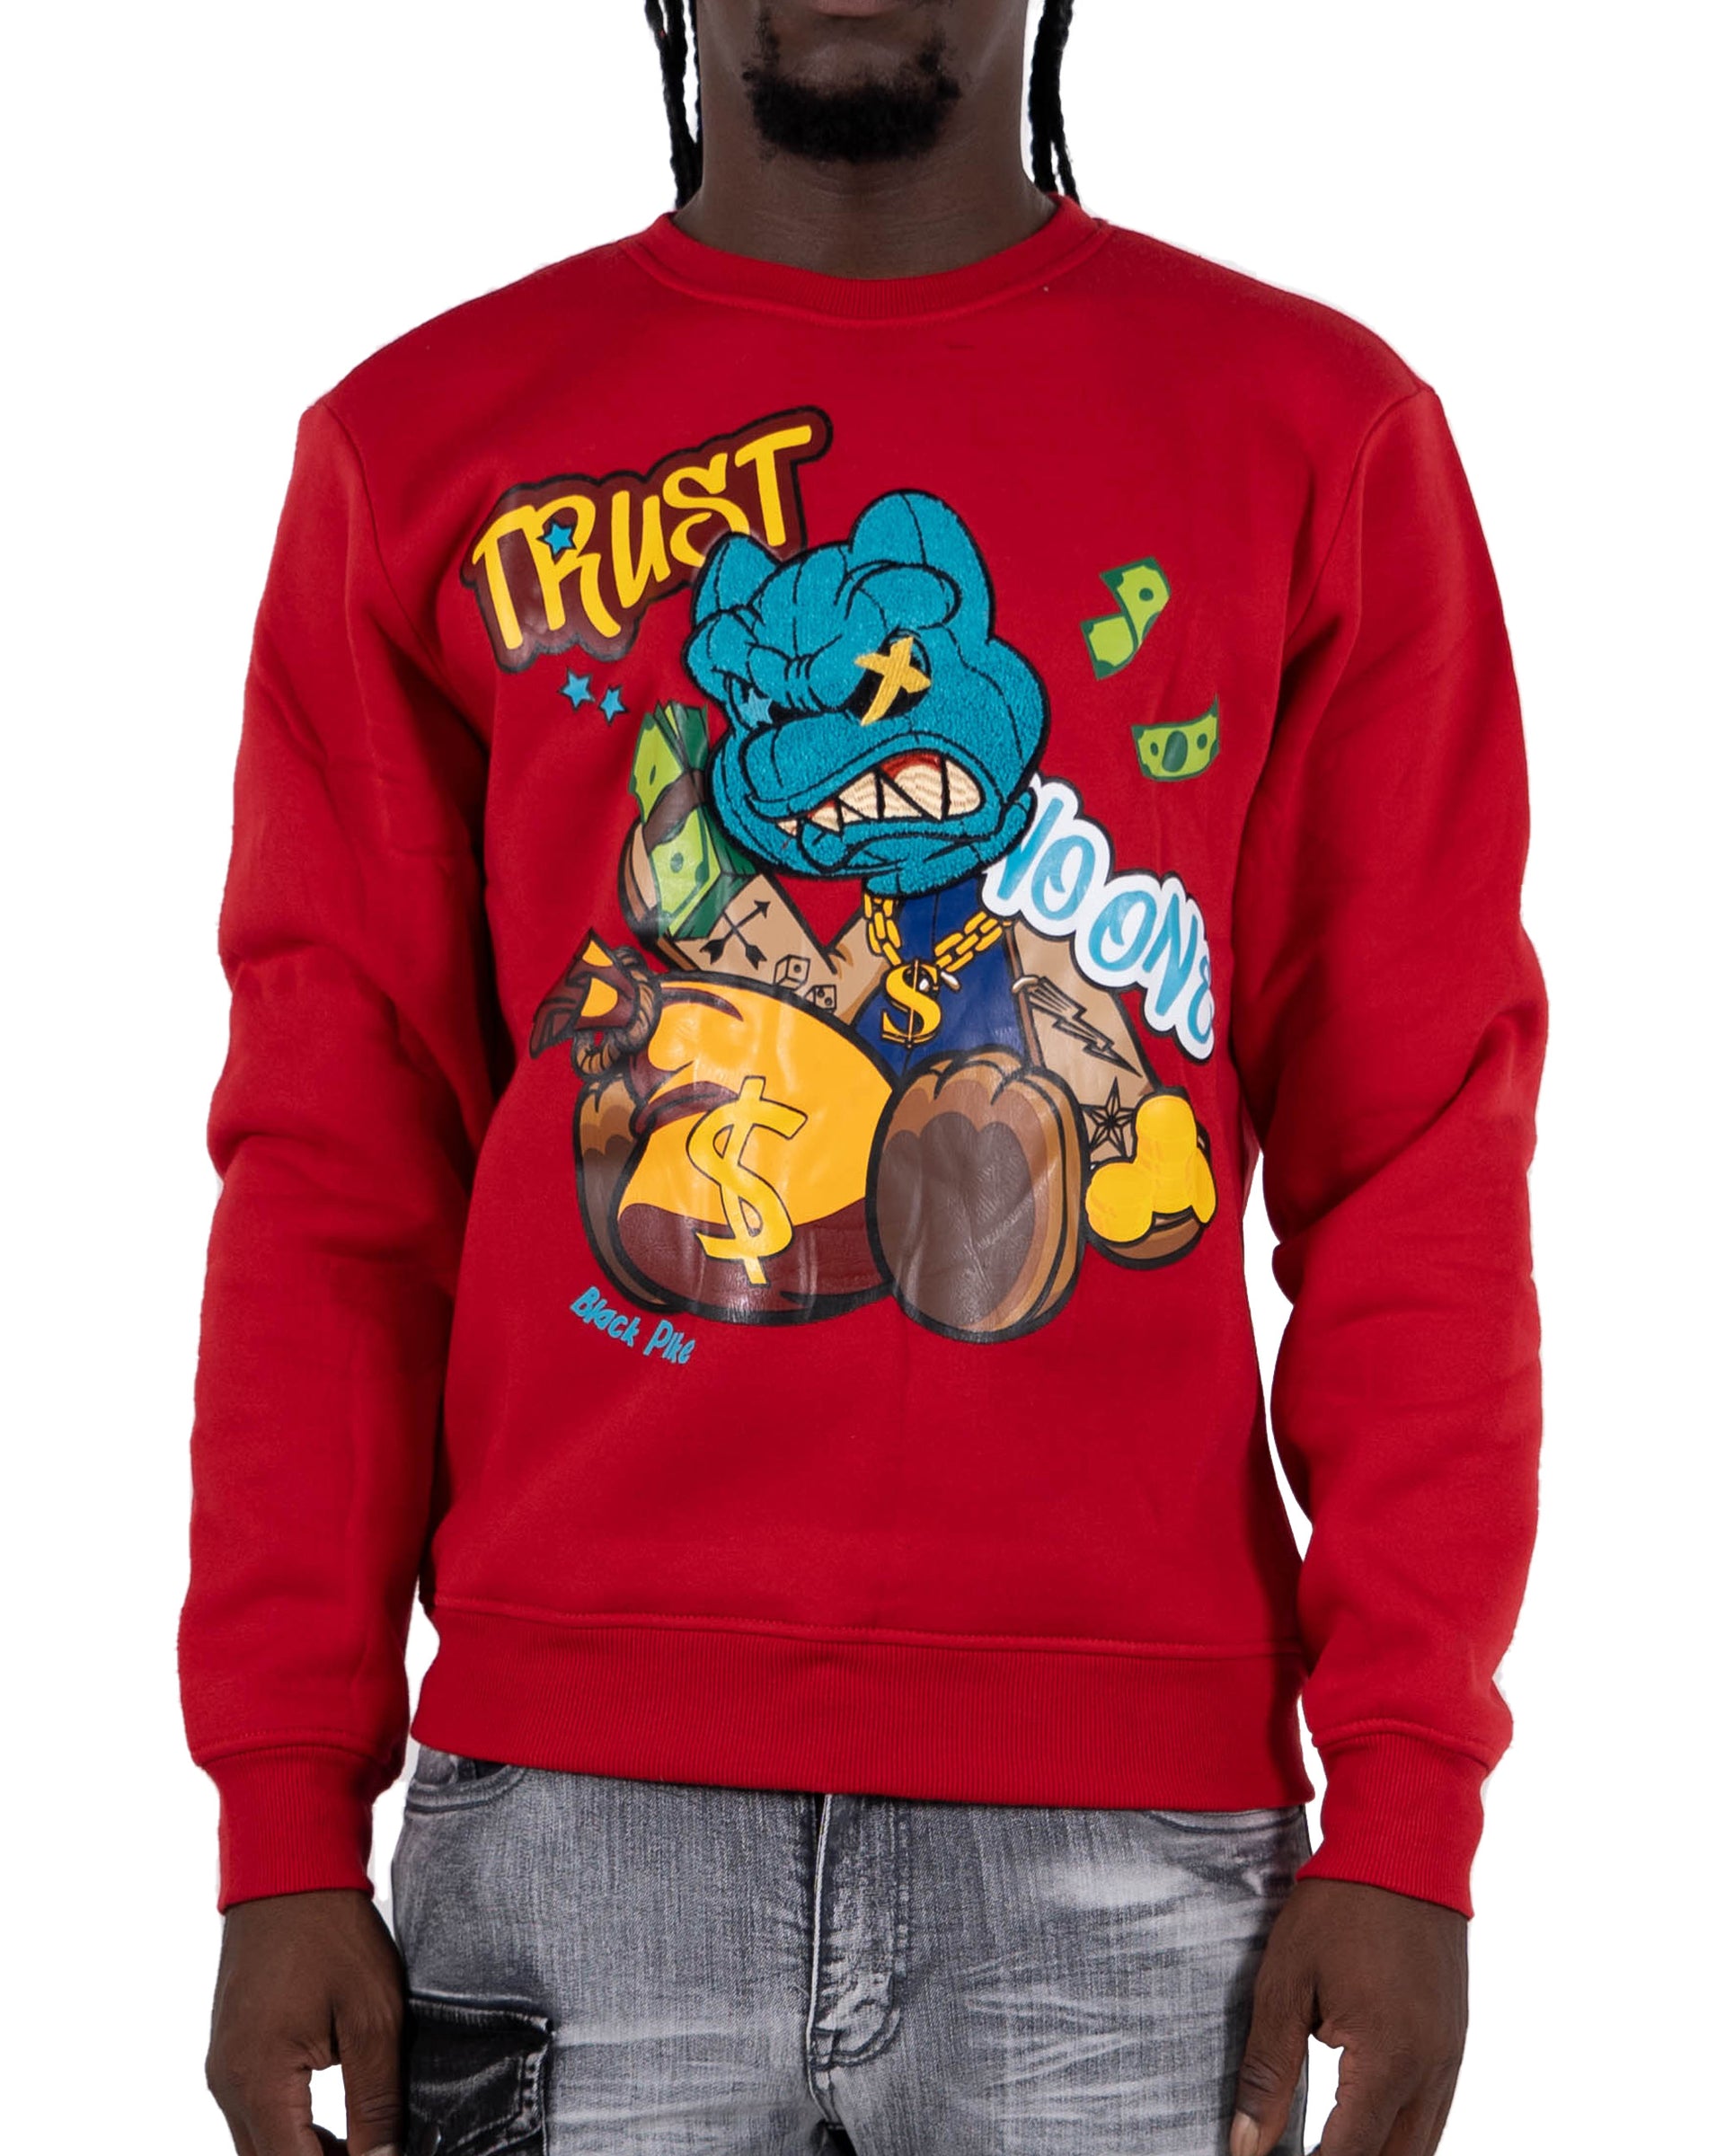 Men's "Trust No One" Graphic Embroidered Sweatshirt | Red